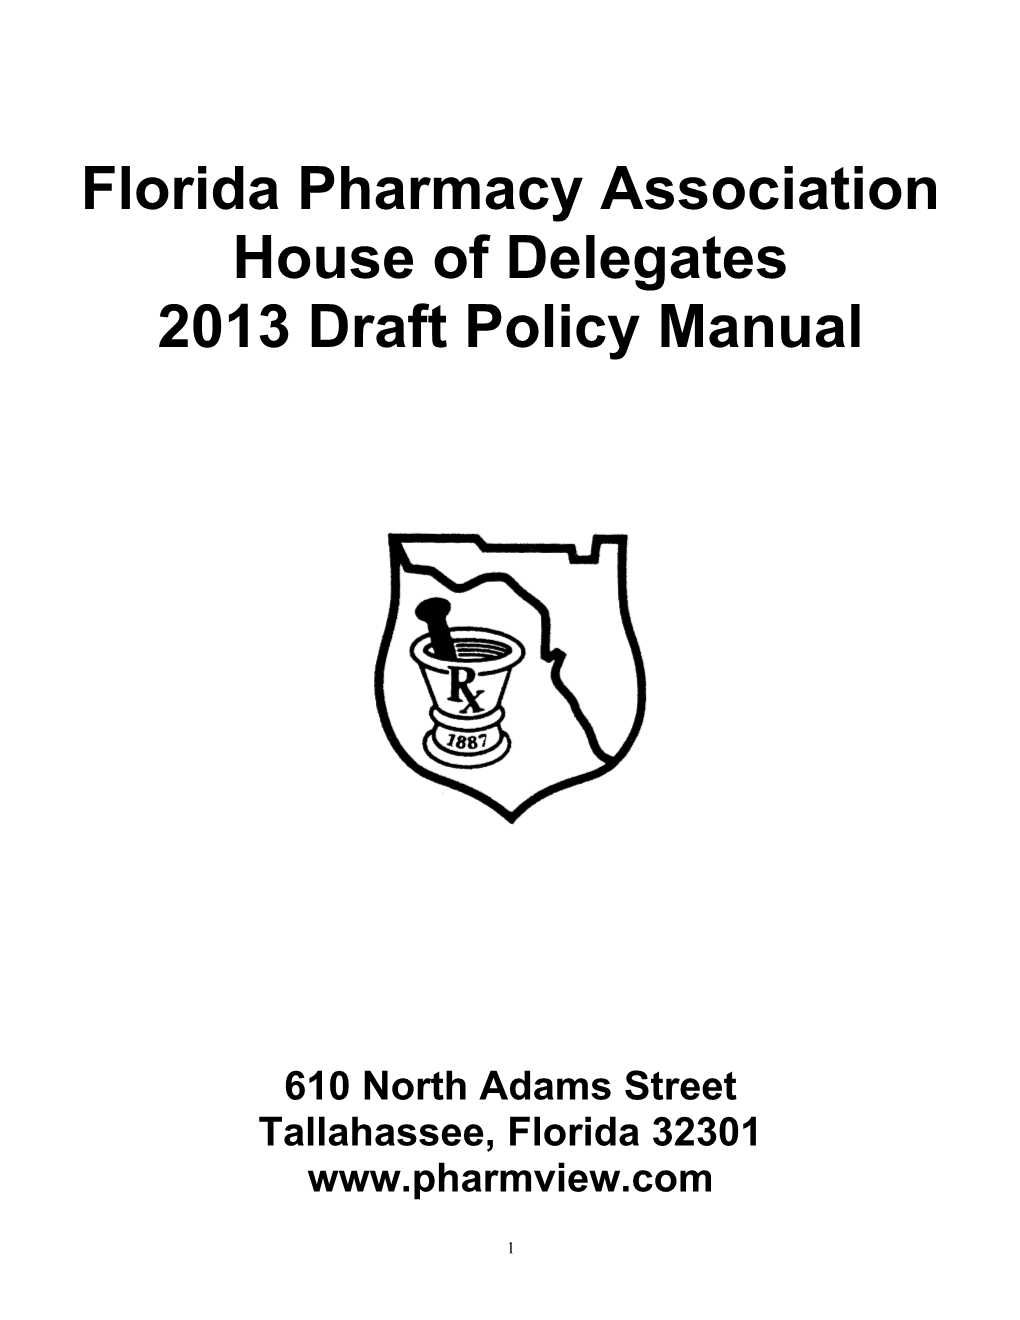 Florida Pharmacy Association House of Delegates